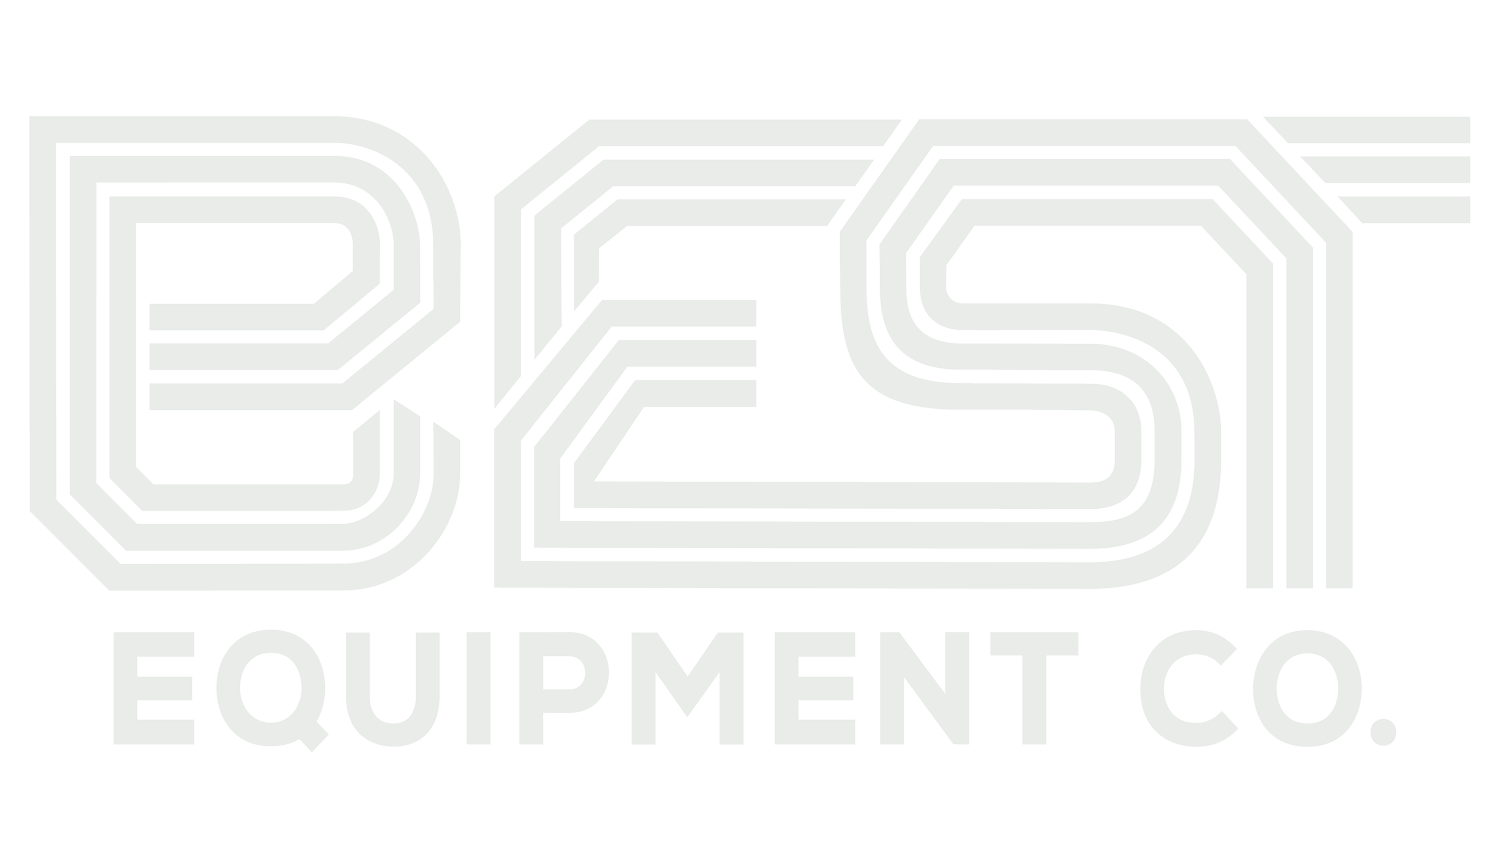 Best Equipment Co., Inc.